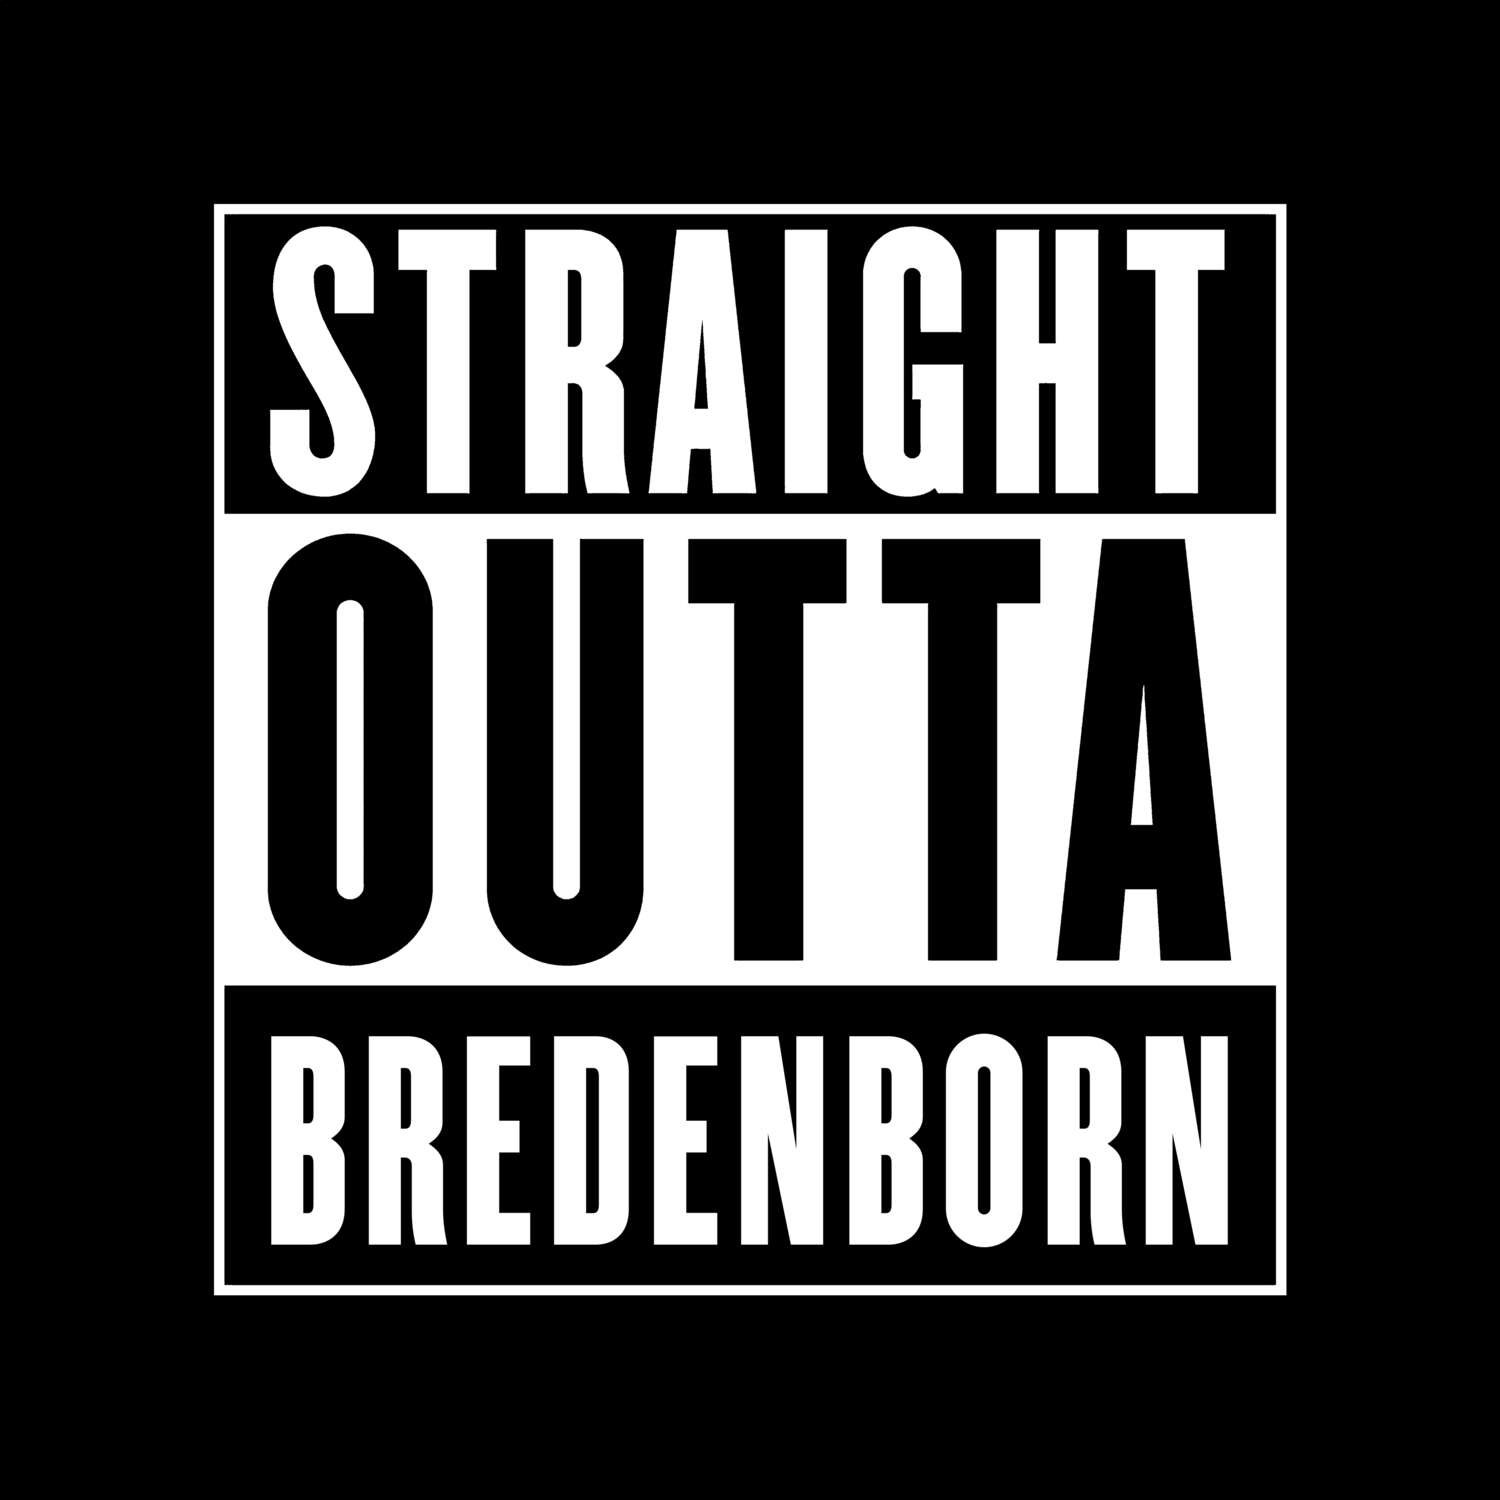 Bredenborn T-Shirt »Straight Outta«